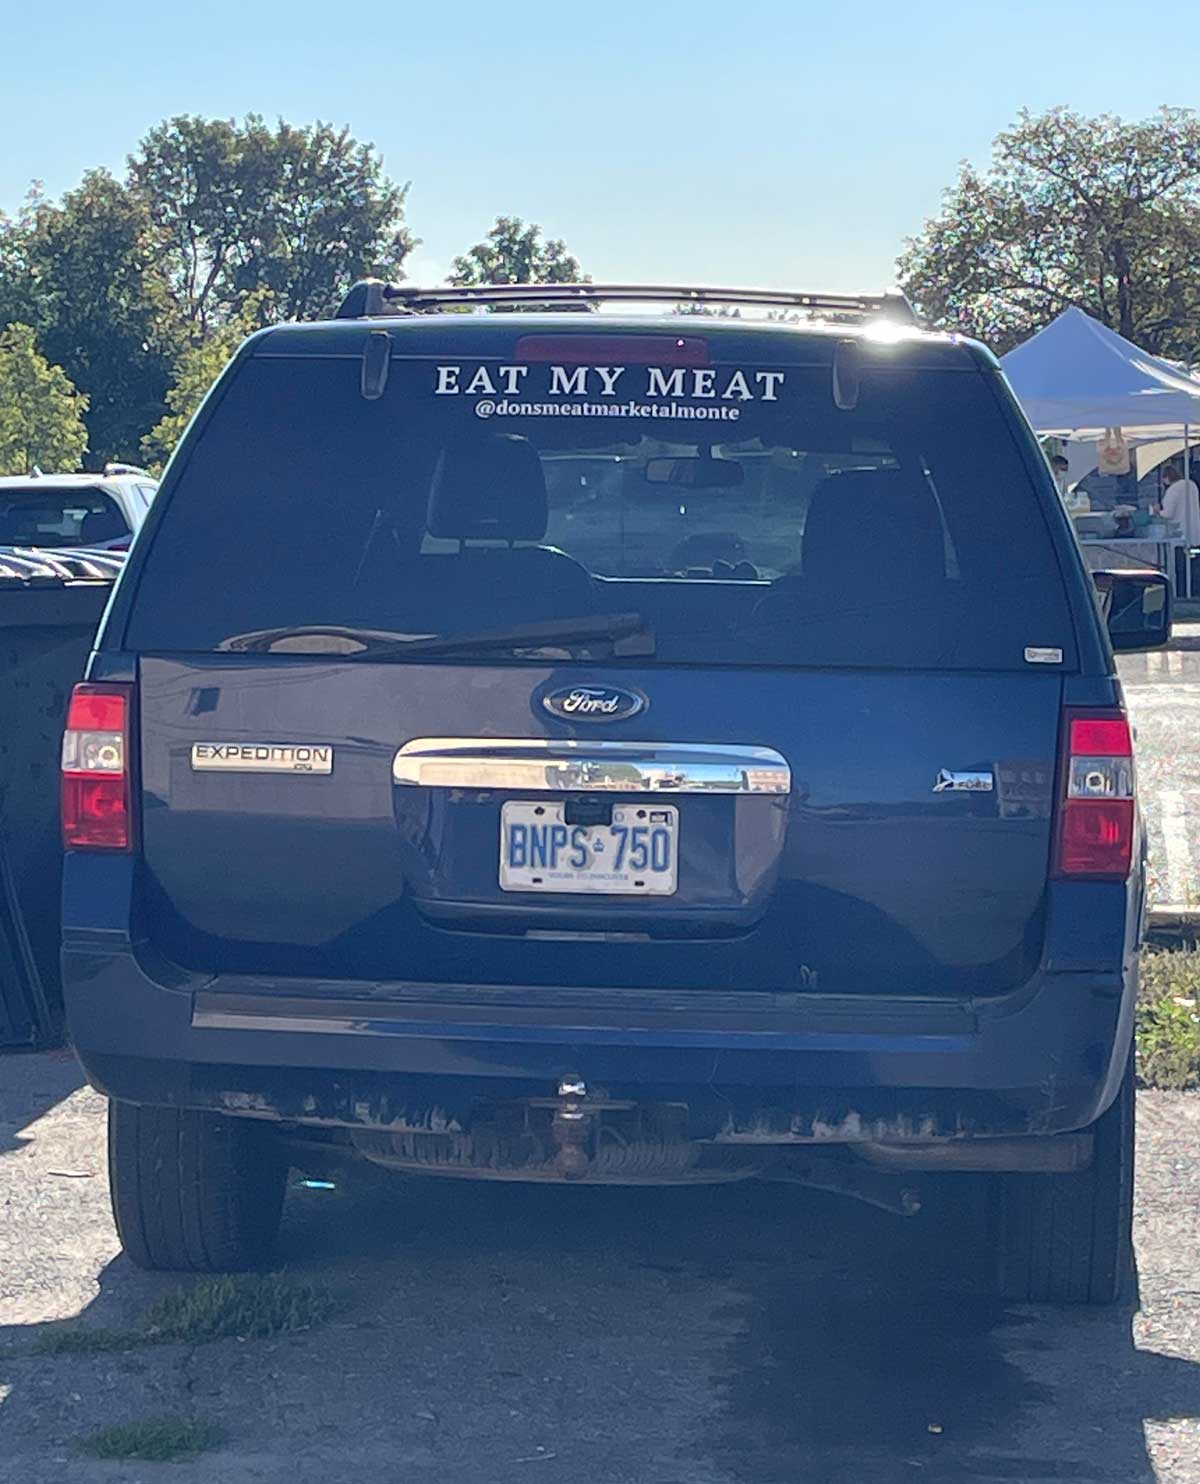 My local butcher's car